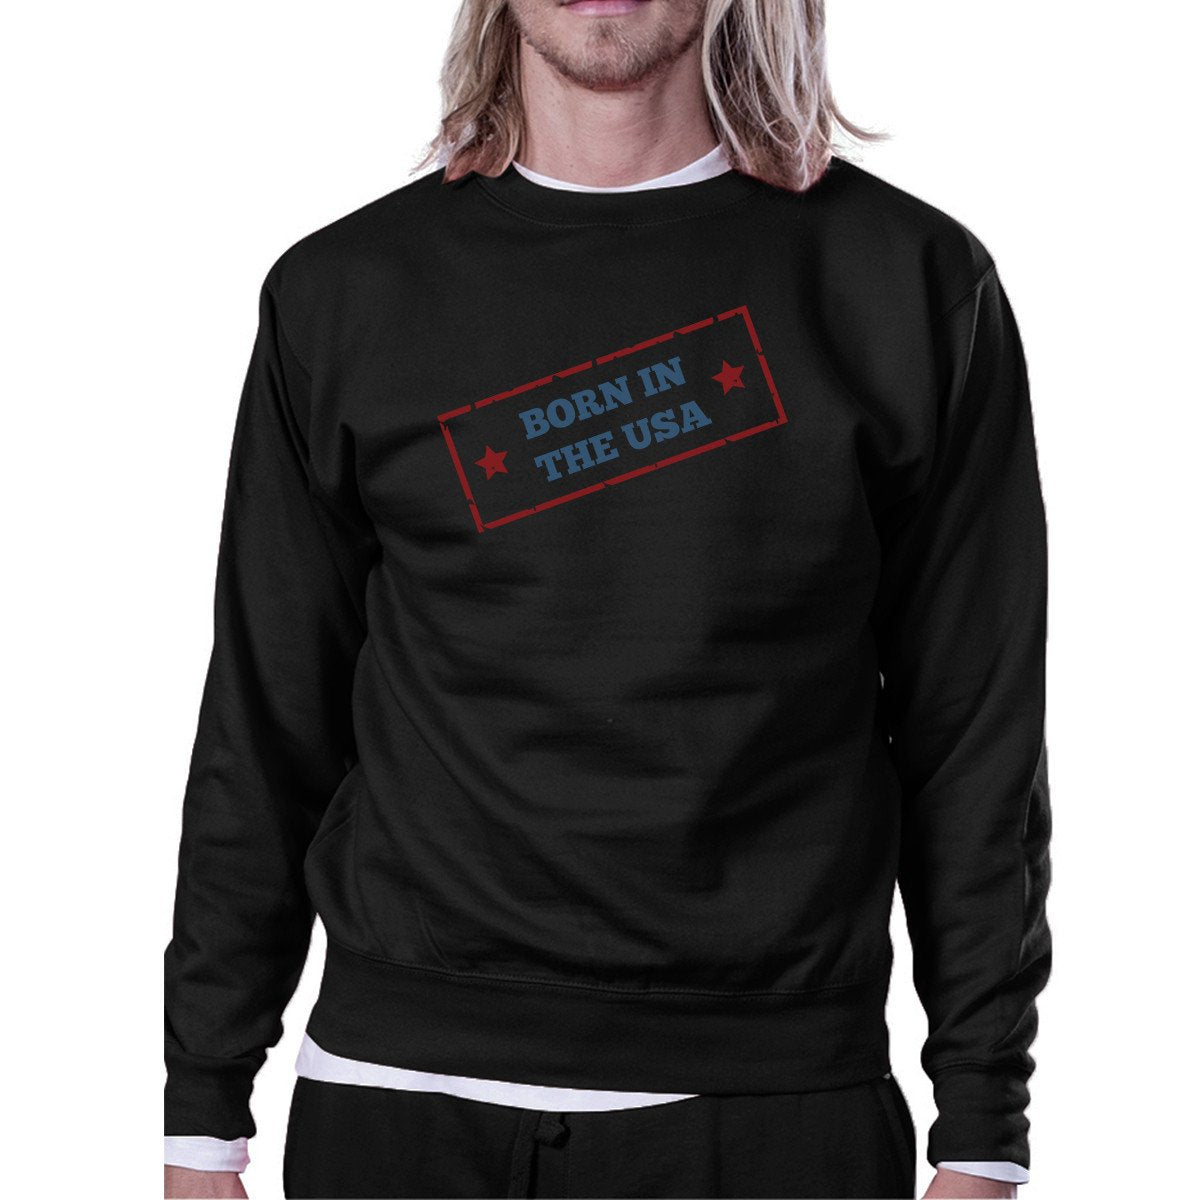 Born In The USA Unisex Graphic Sweatshirt Black Round Neck Pullover